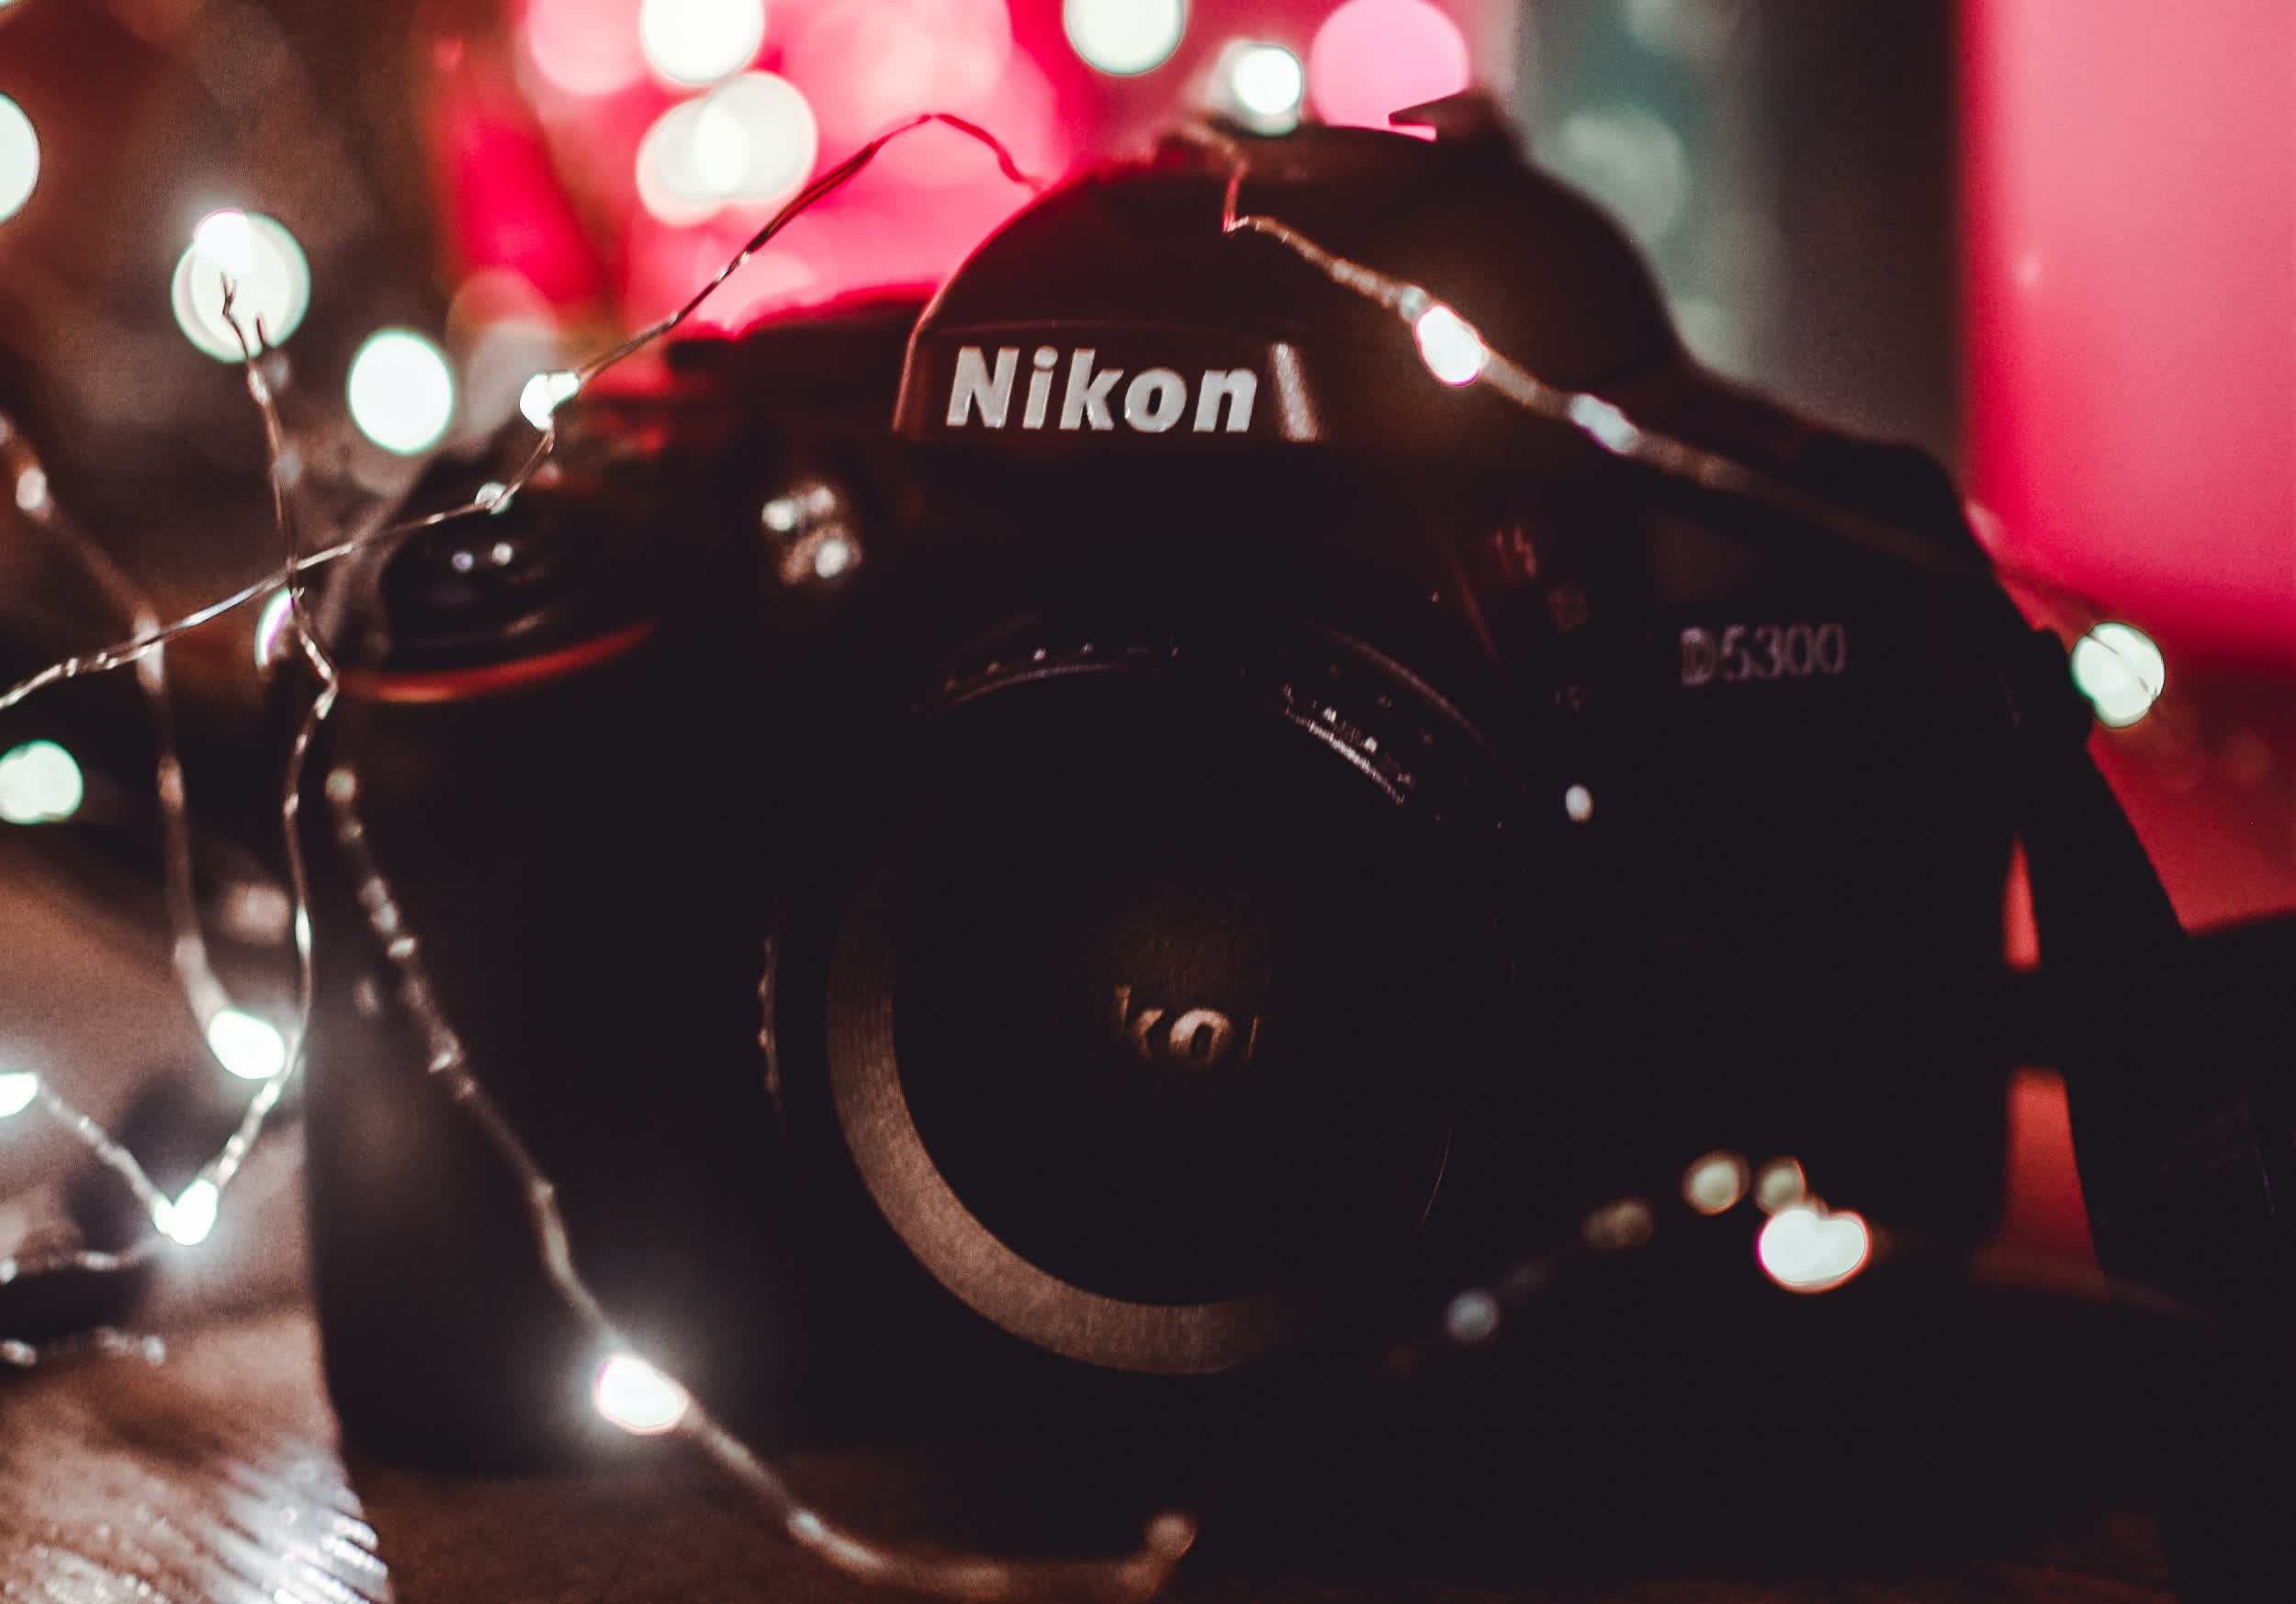 Nikon is halting DSLR camera development to focus on mirrorless market, insiders say